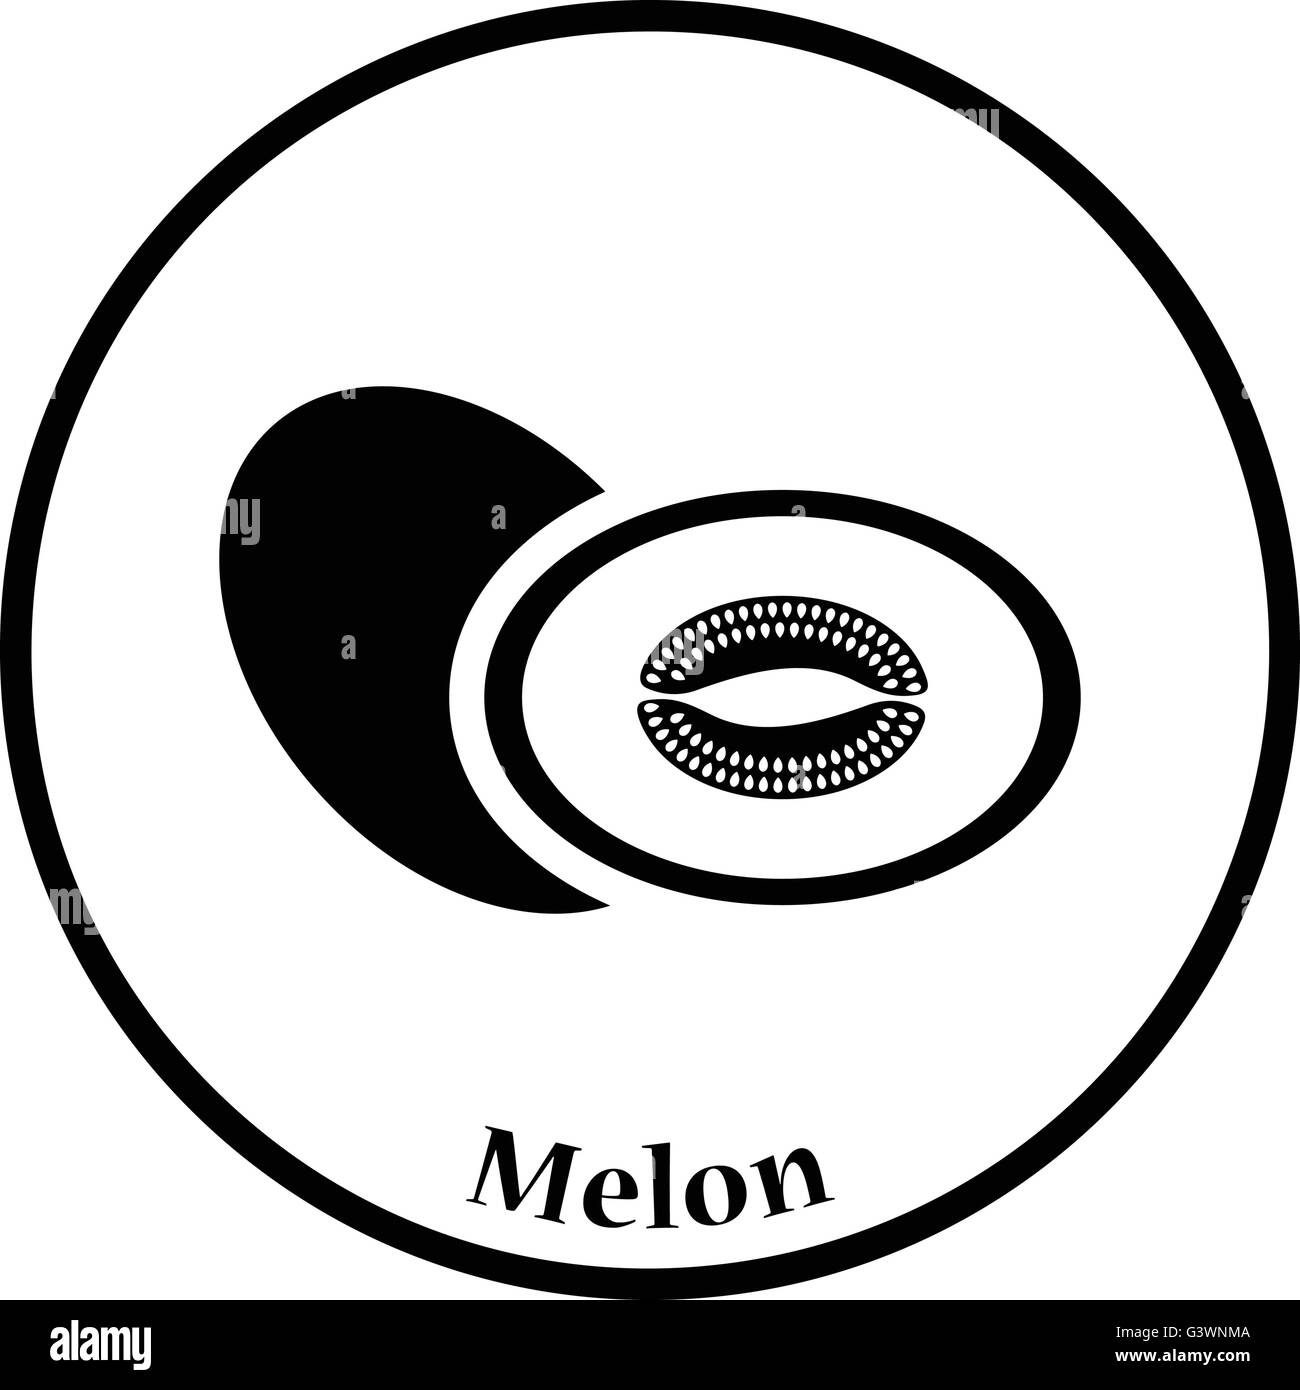 Icon of Melon. Thin circle design. Vector illustration. Stock Vector